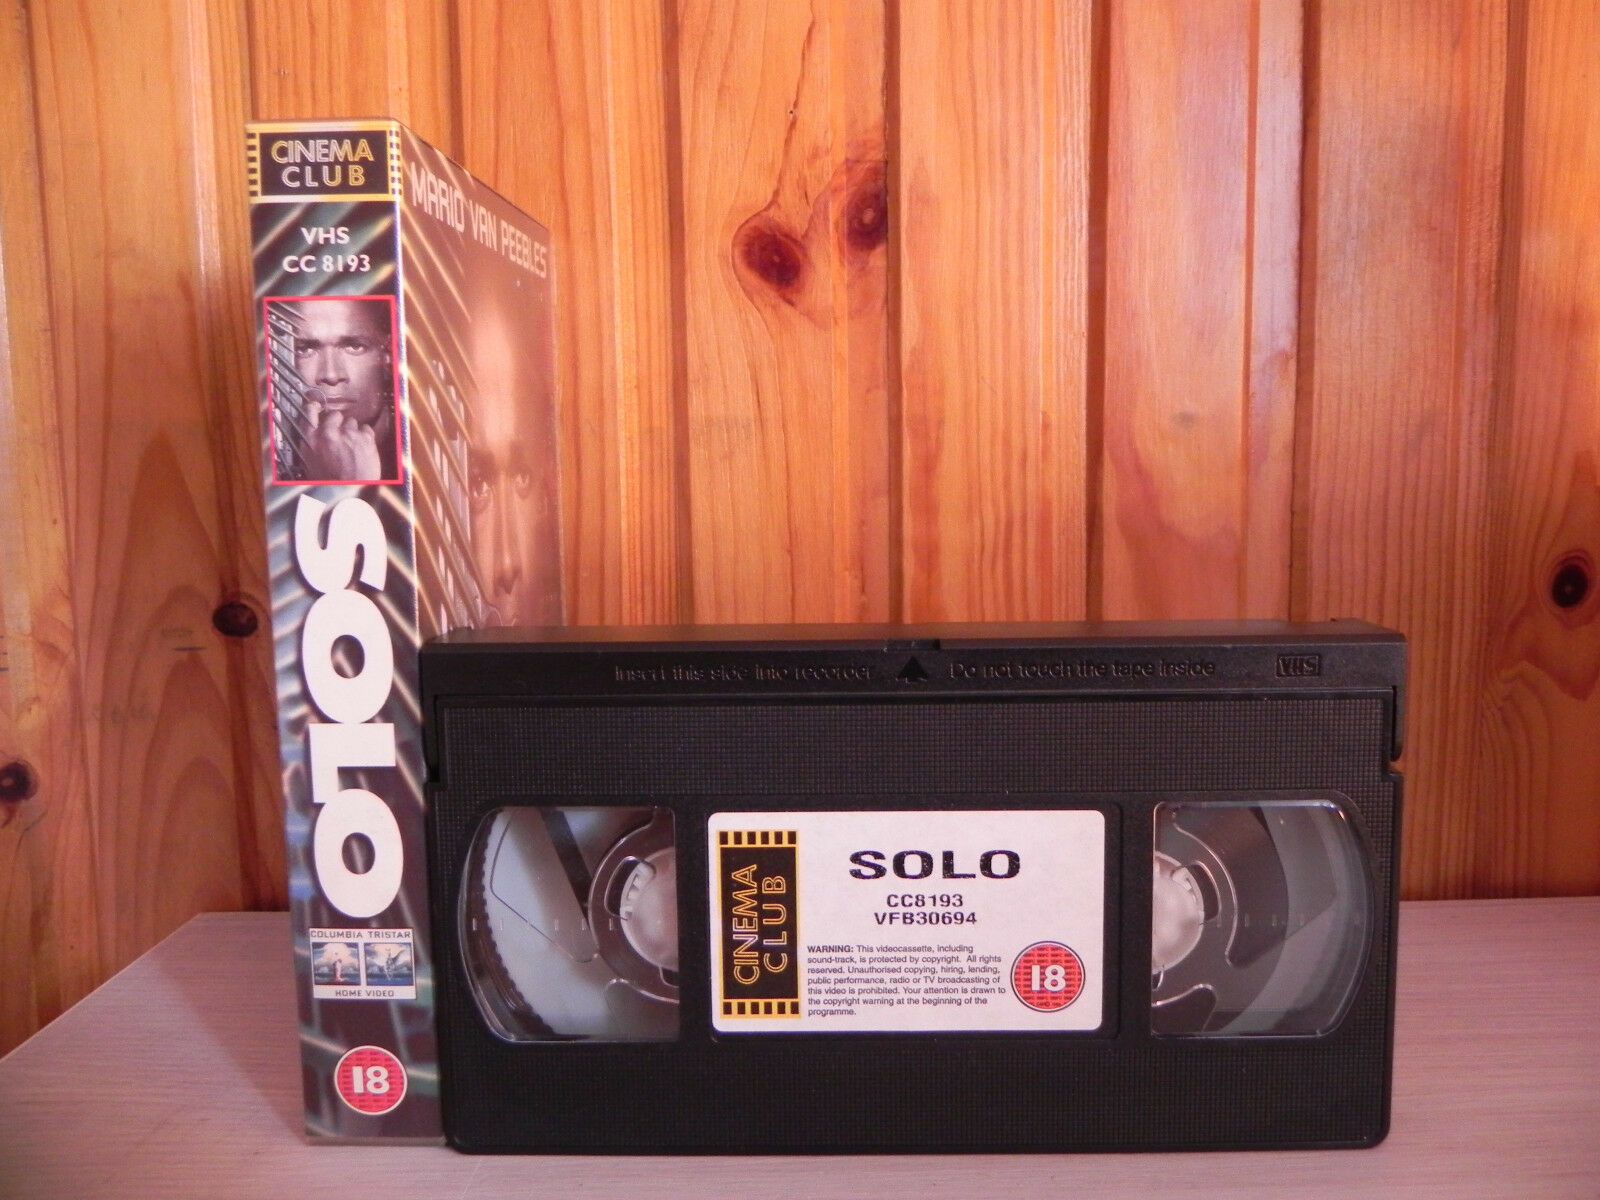 Solo - Action - Mario Van Peebles - William Saddler - Columbia - 8193 - VHS-